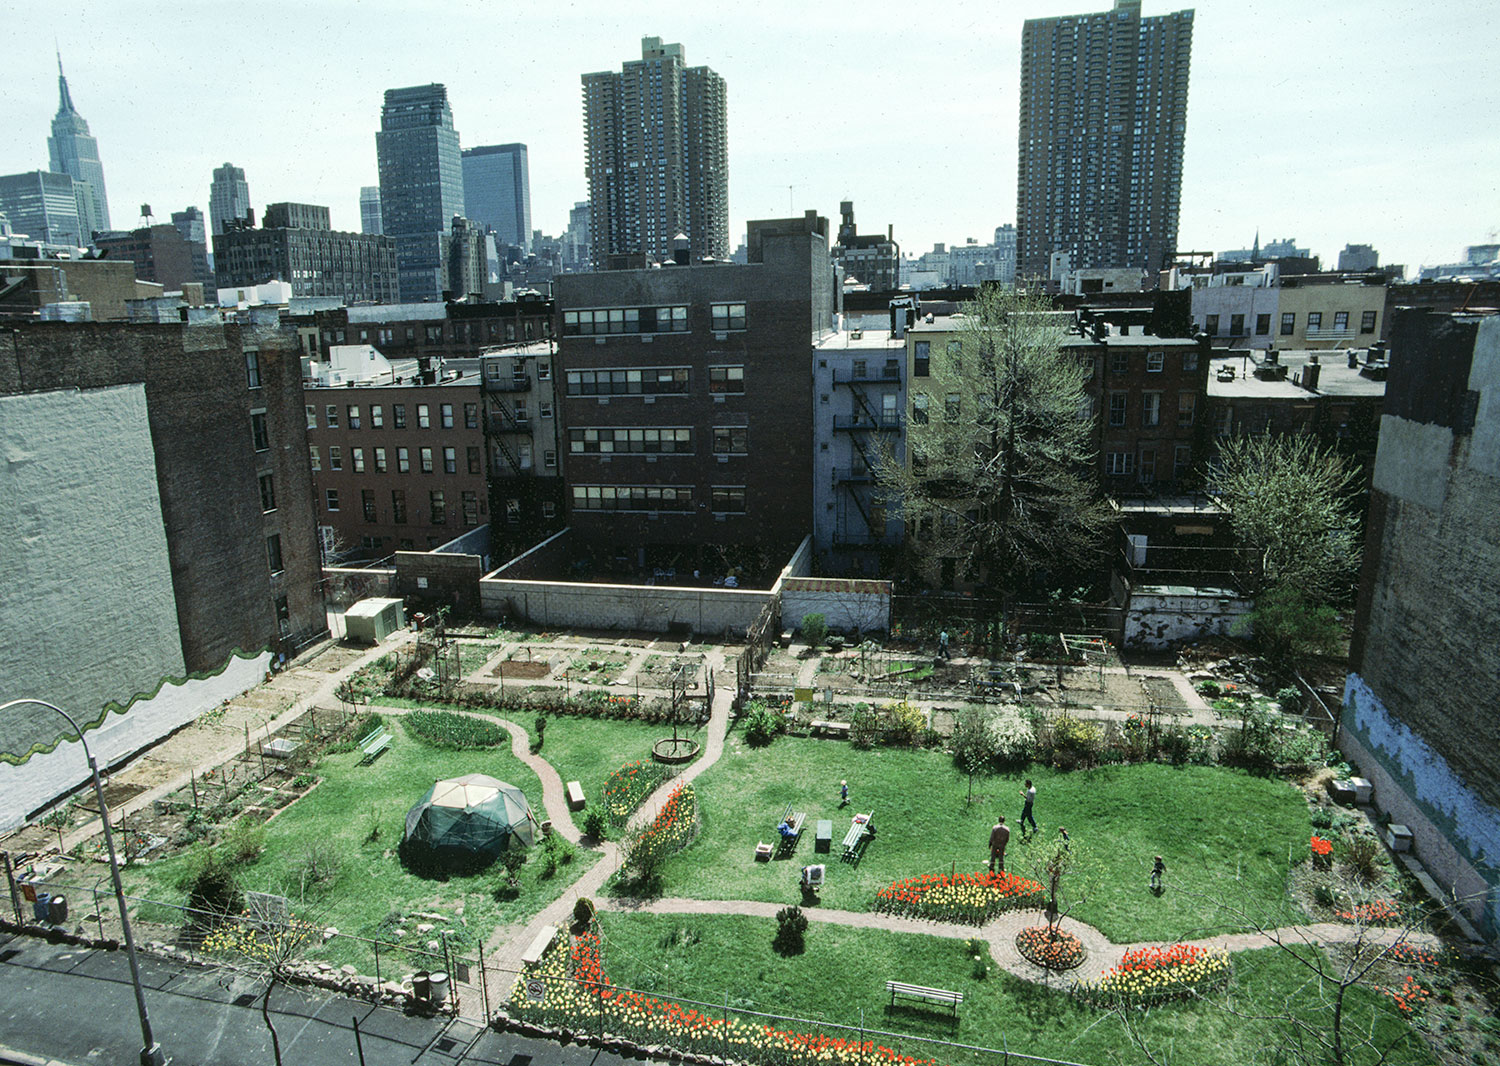 Clinton Community Garden in 1984